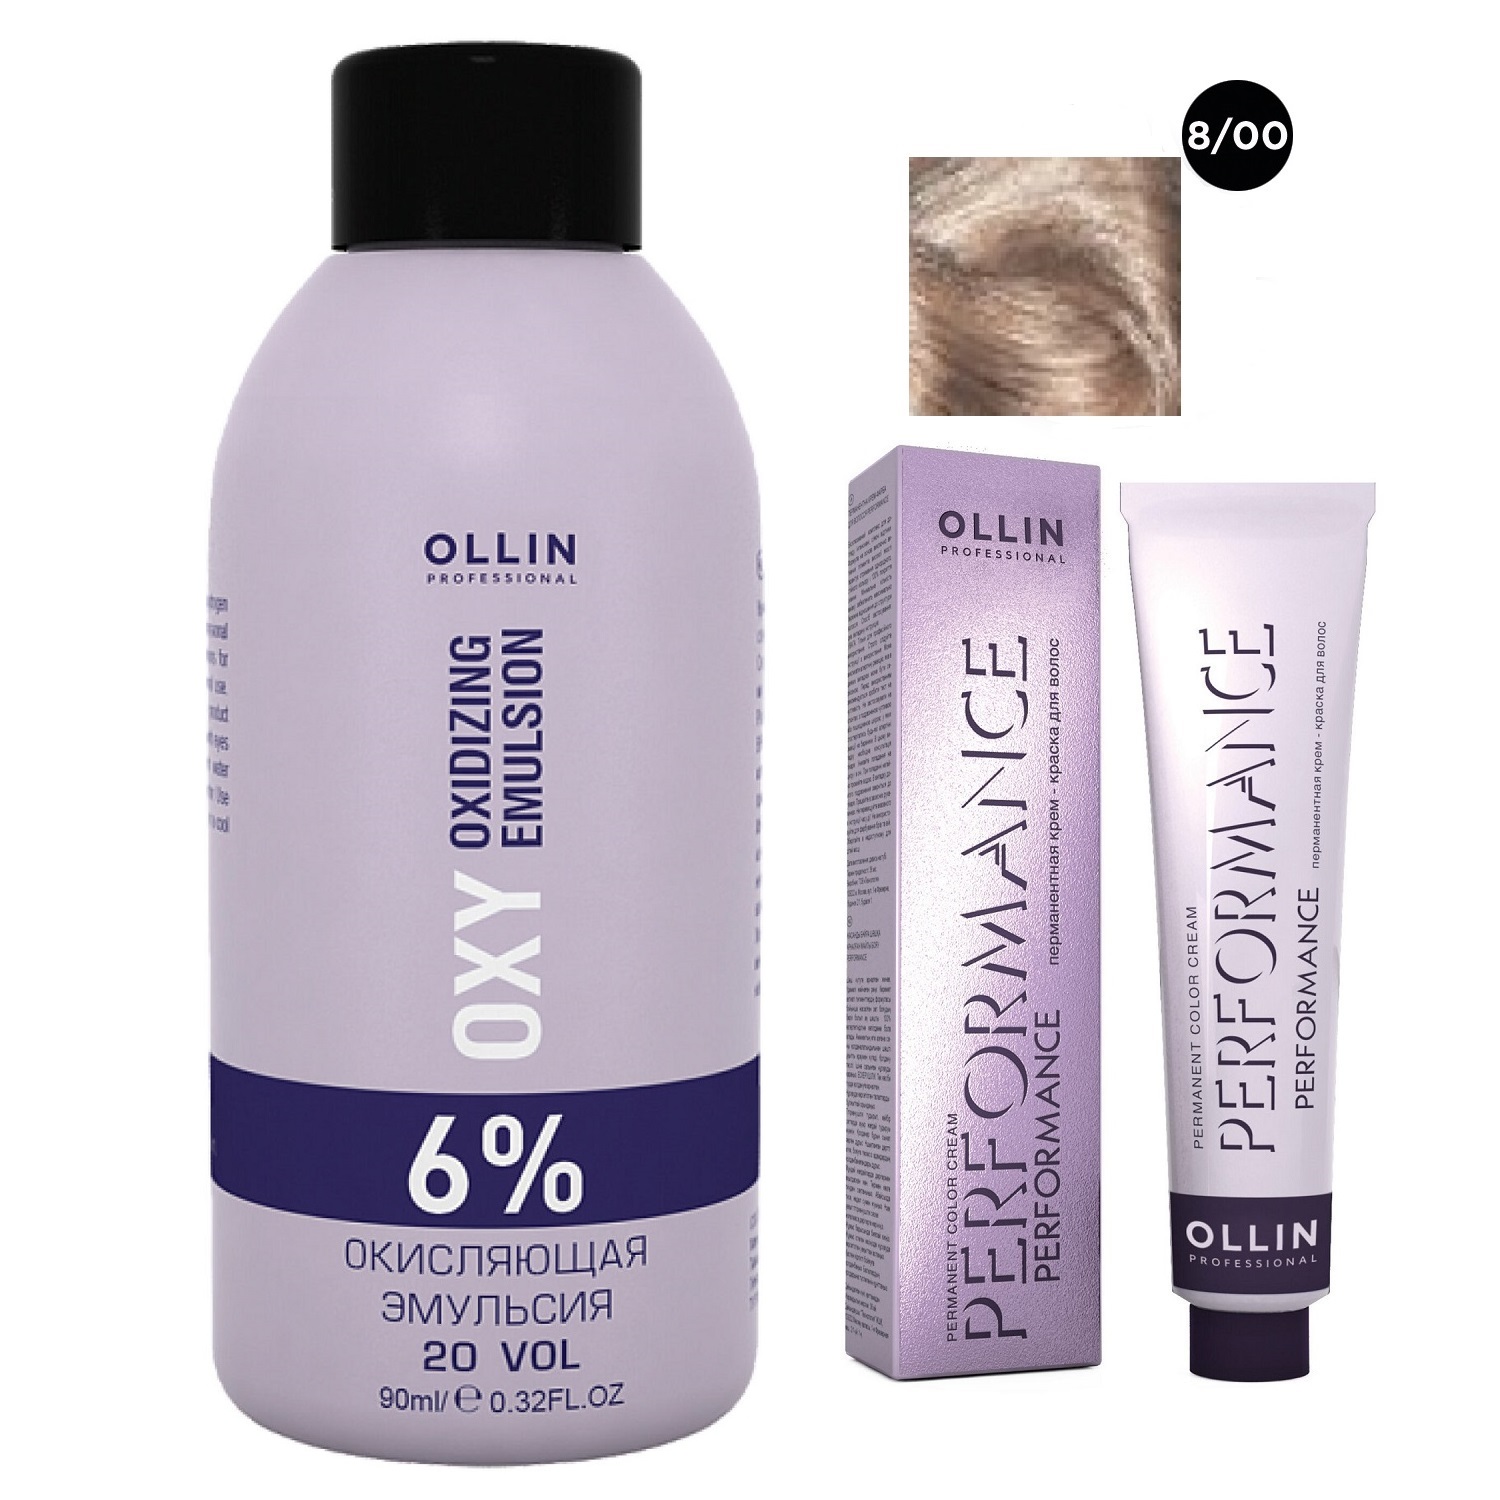 Ollin Professional Набор Перманентная крем-краска для волос Ollin Performance оттенок 8/00 светло-русый глубокий 60 мл + Окисляющая эмульсия Oxy 6% 90 мл (Ollin Professional, Performance)